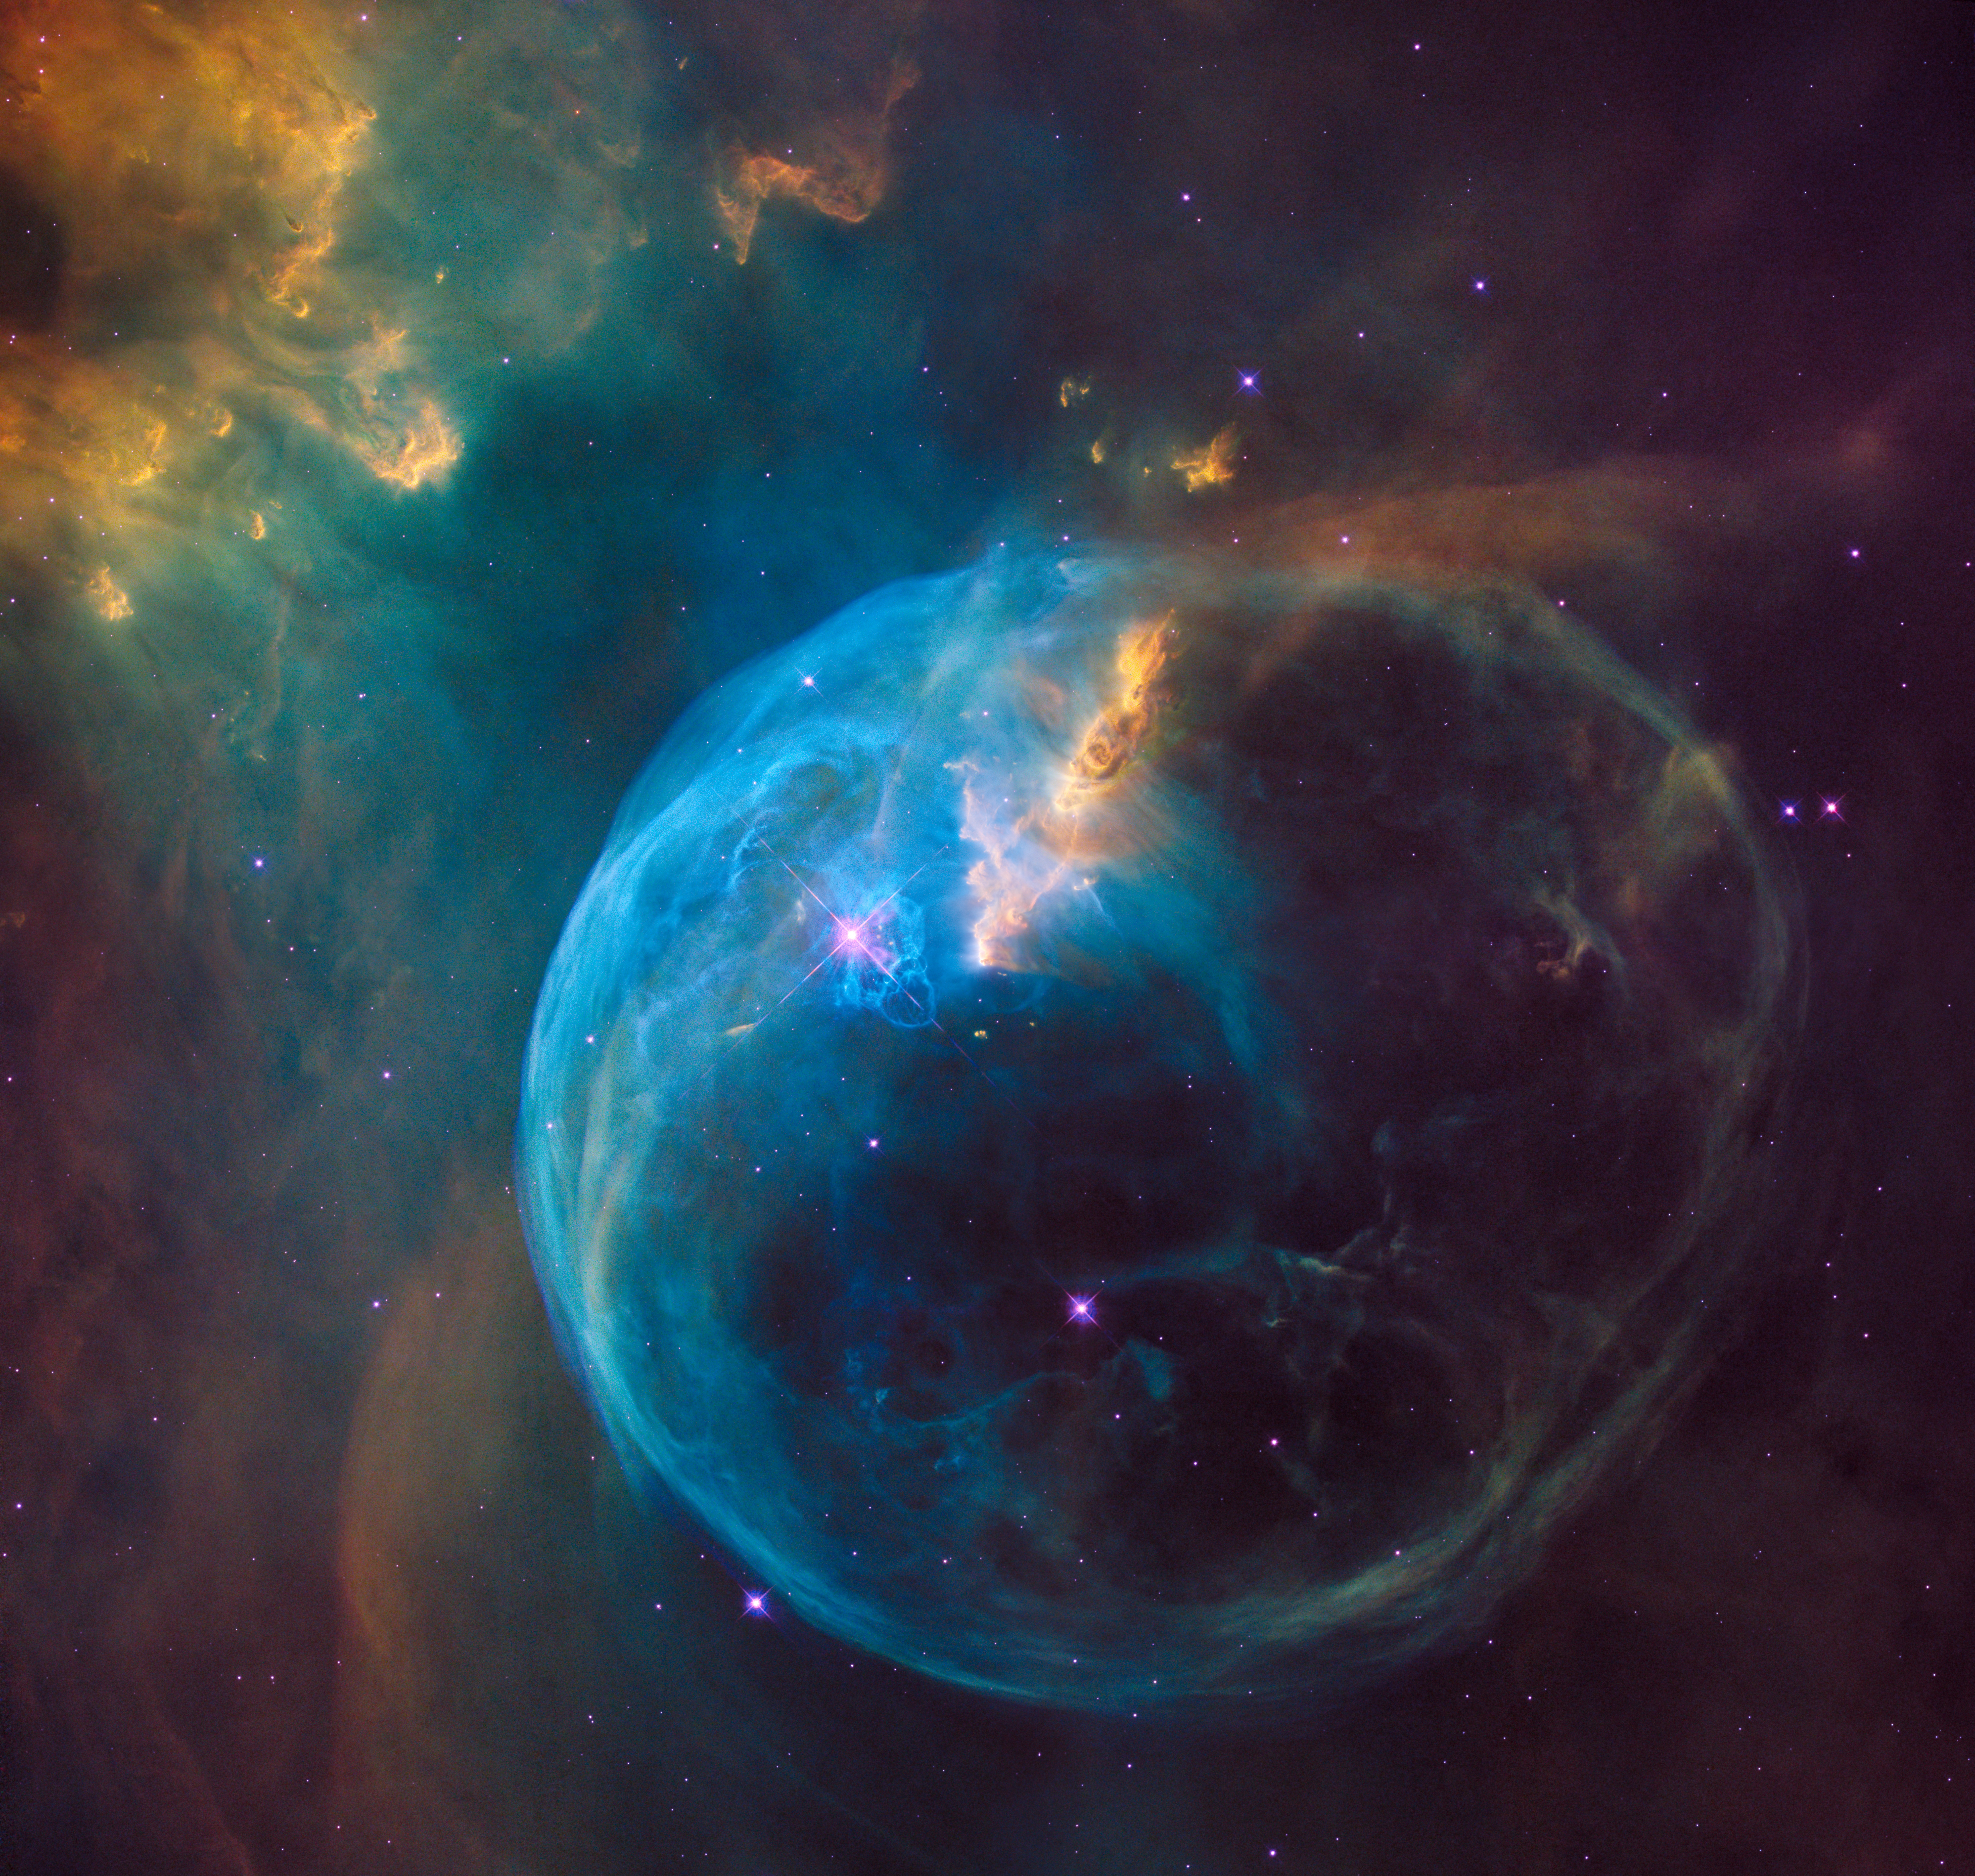 Picture of a nebula